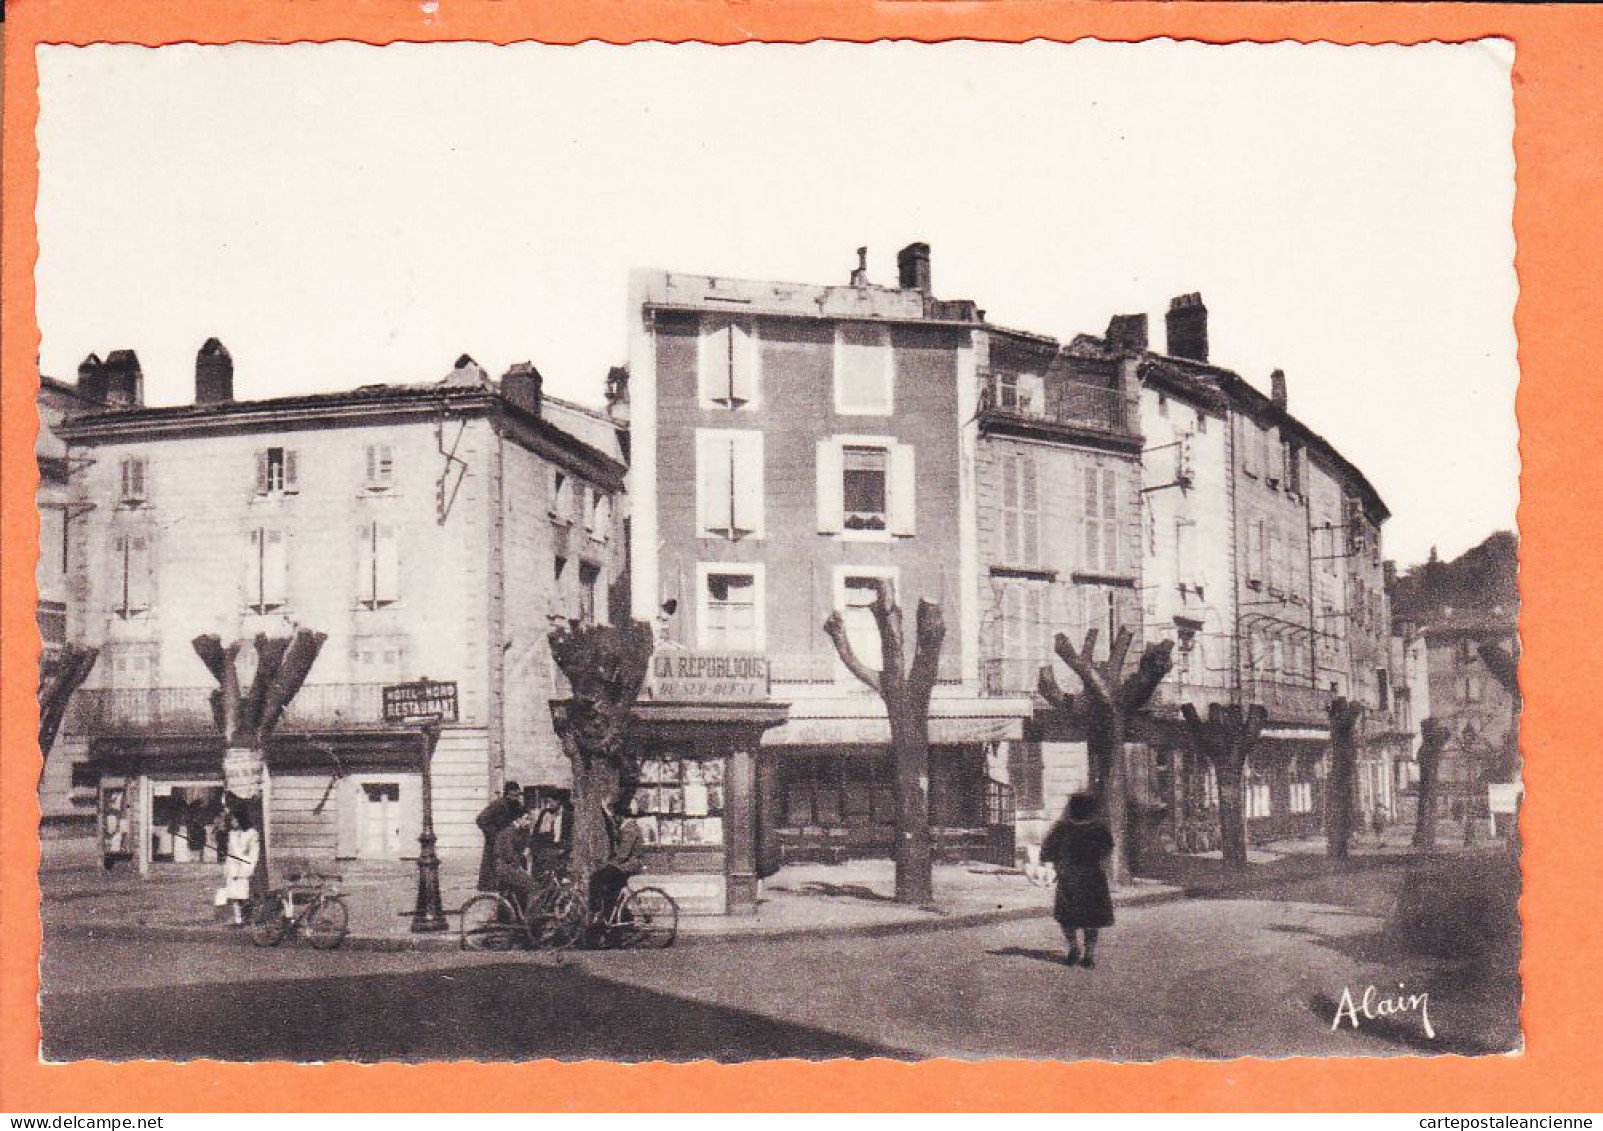 01921 / MAZAMET 81-Tarn Kiosque Journaux Jeunes Cyclistes Animation Mazamétaine Place OLOMBEL 1940s ALAIN N°1 - Mazamet